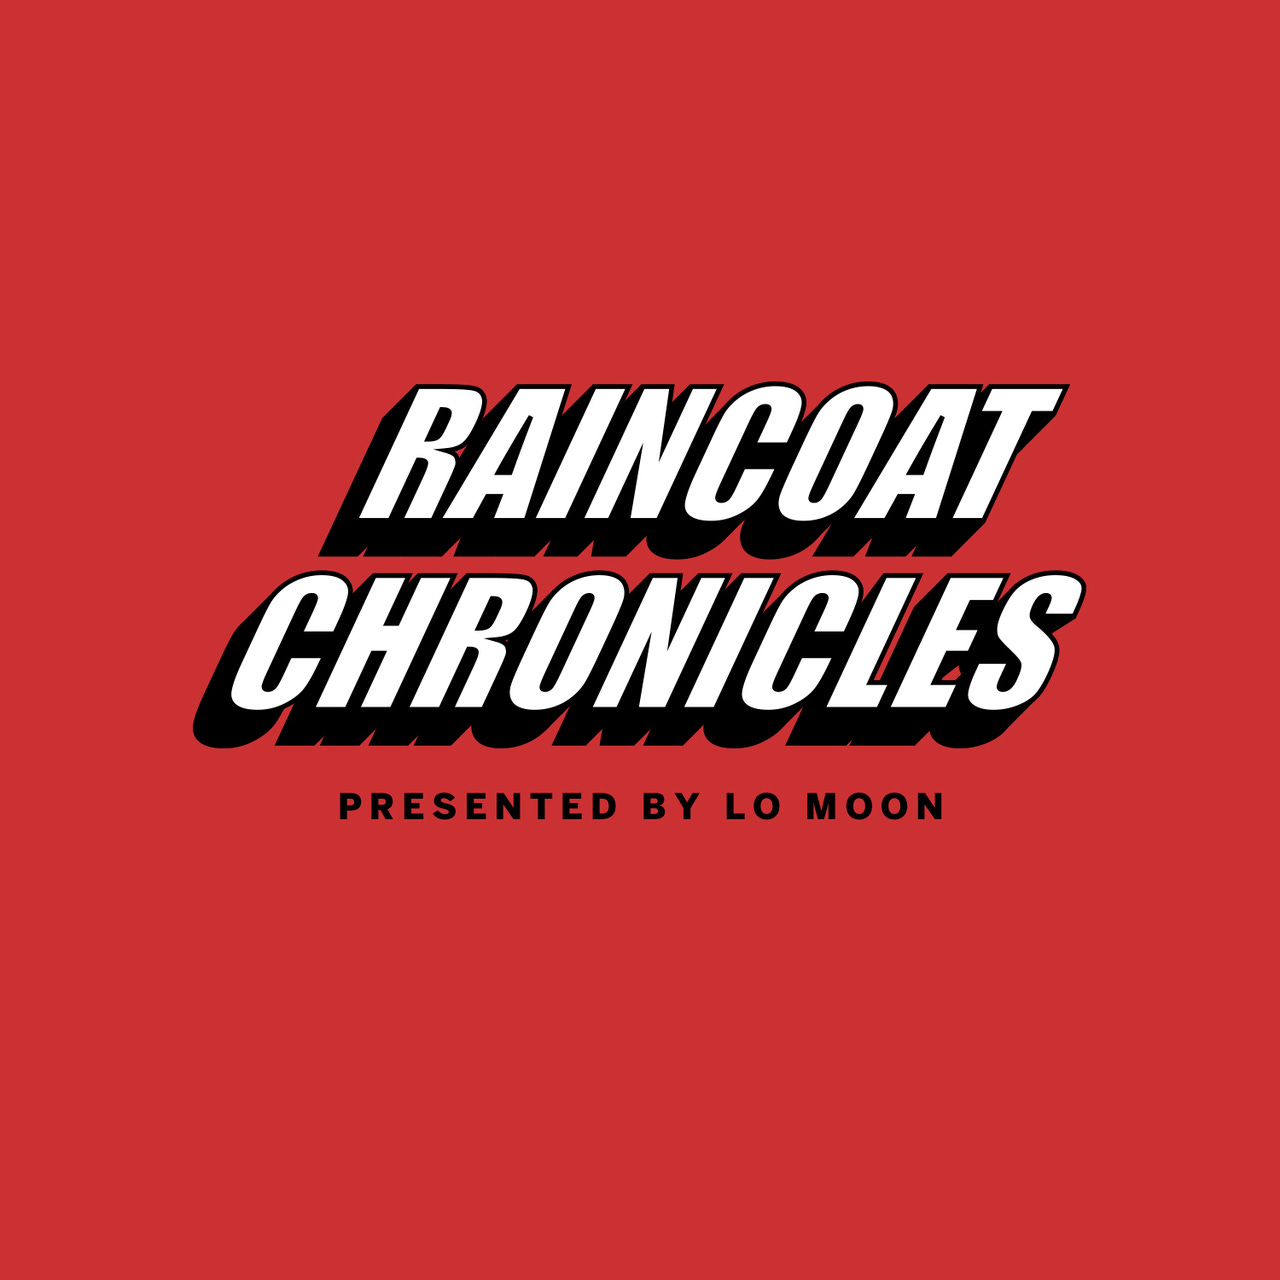 RAINCOAT CHRONICLES